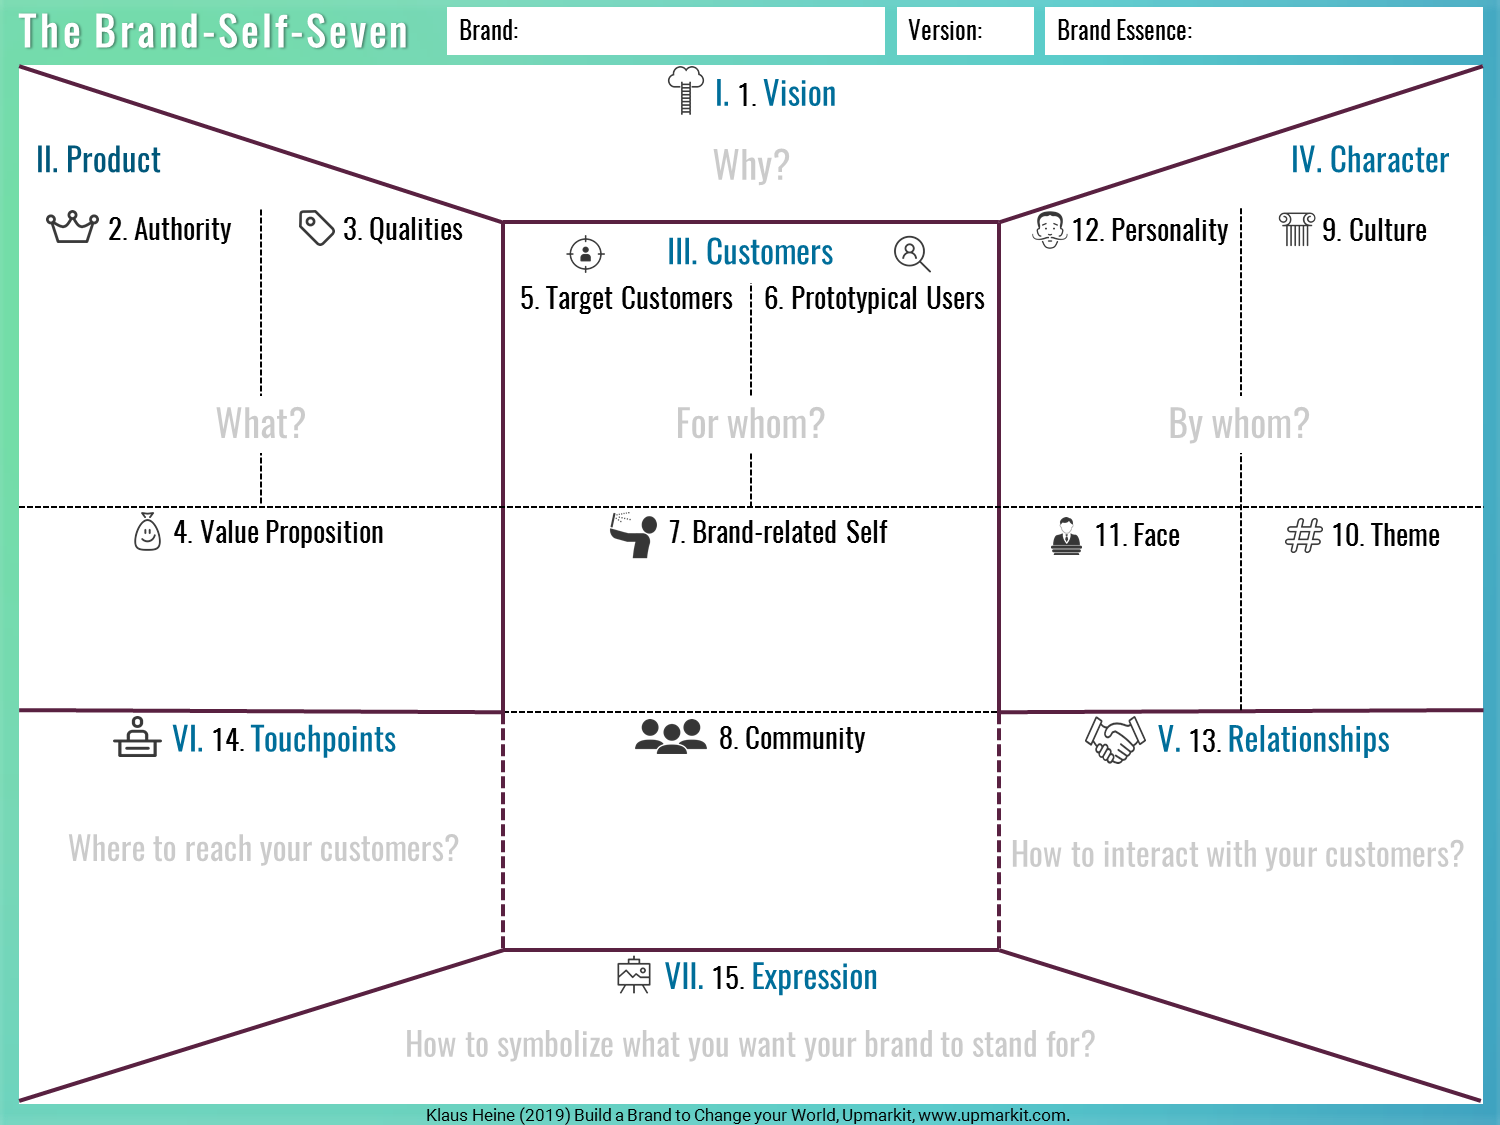 The Brand-Self-Seven - Brand Identity Planning Model